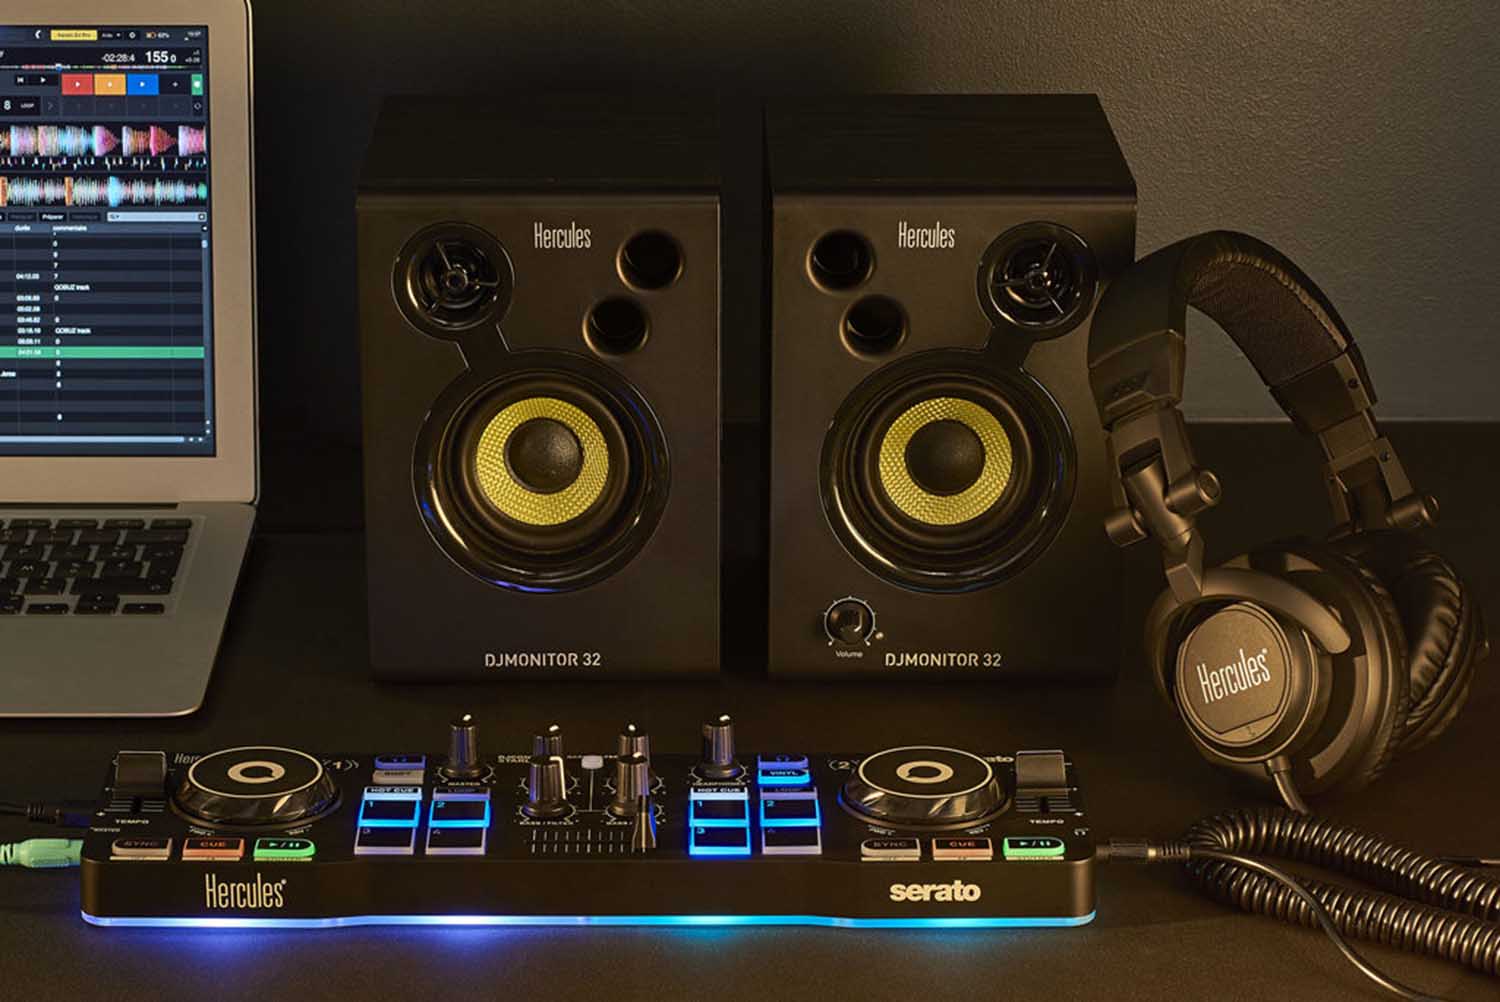 Hercules DJStarter Kit with Controller, Speakers and Headphones - Hollywood DJ